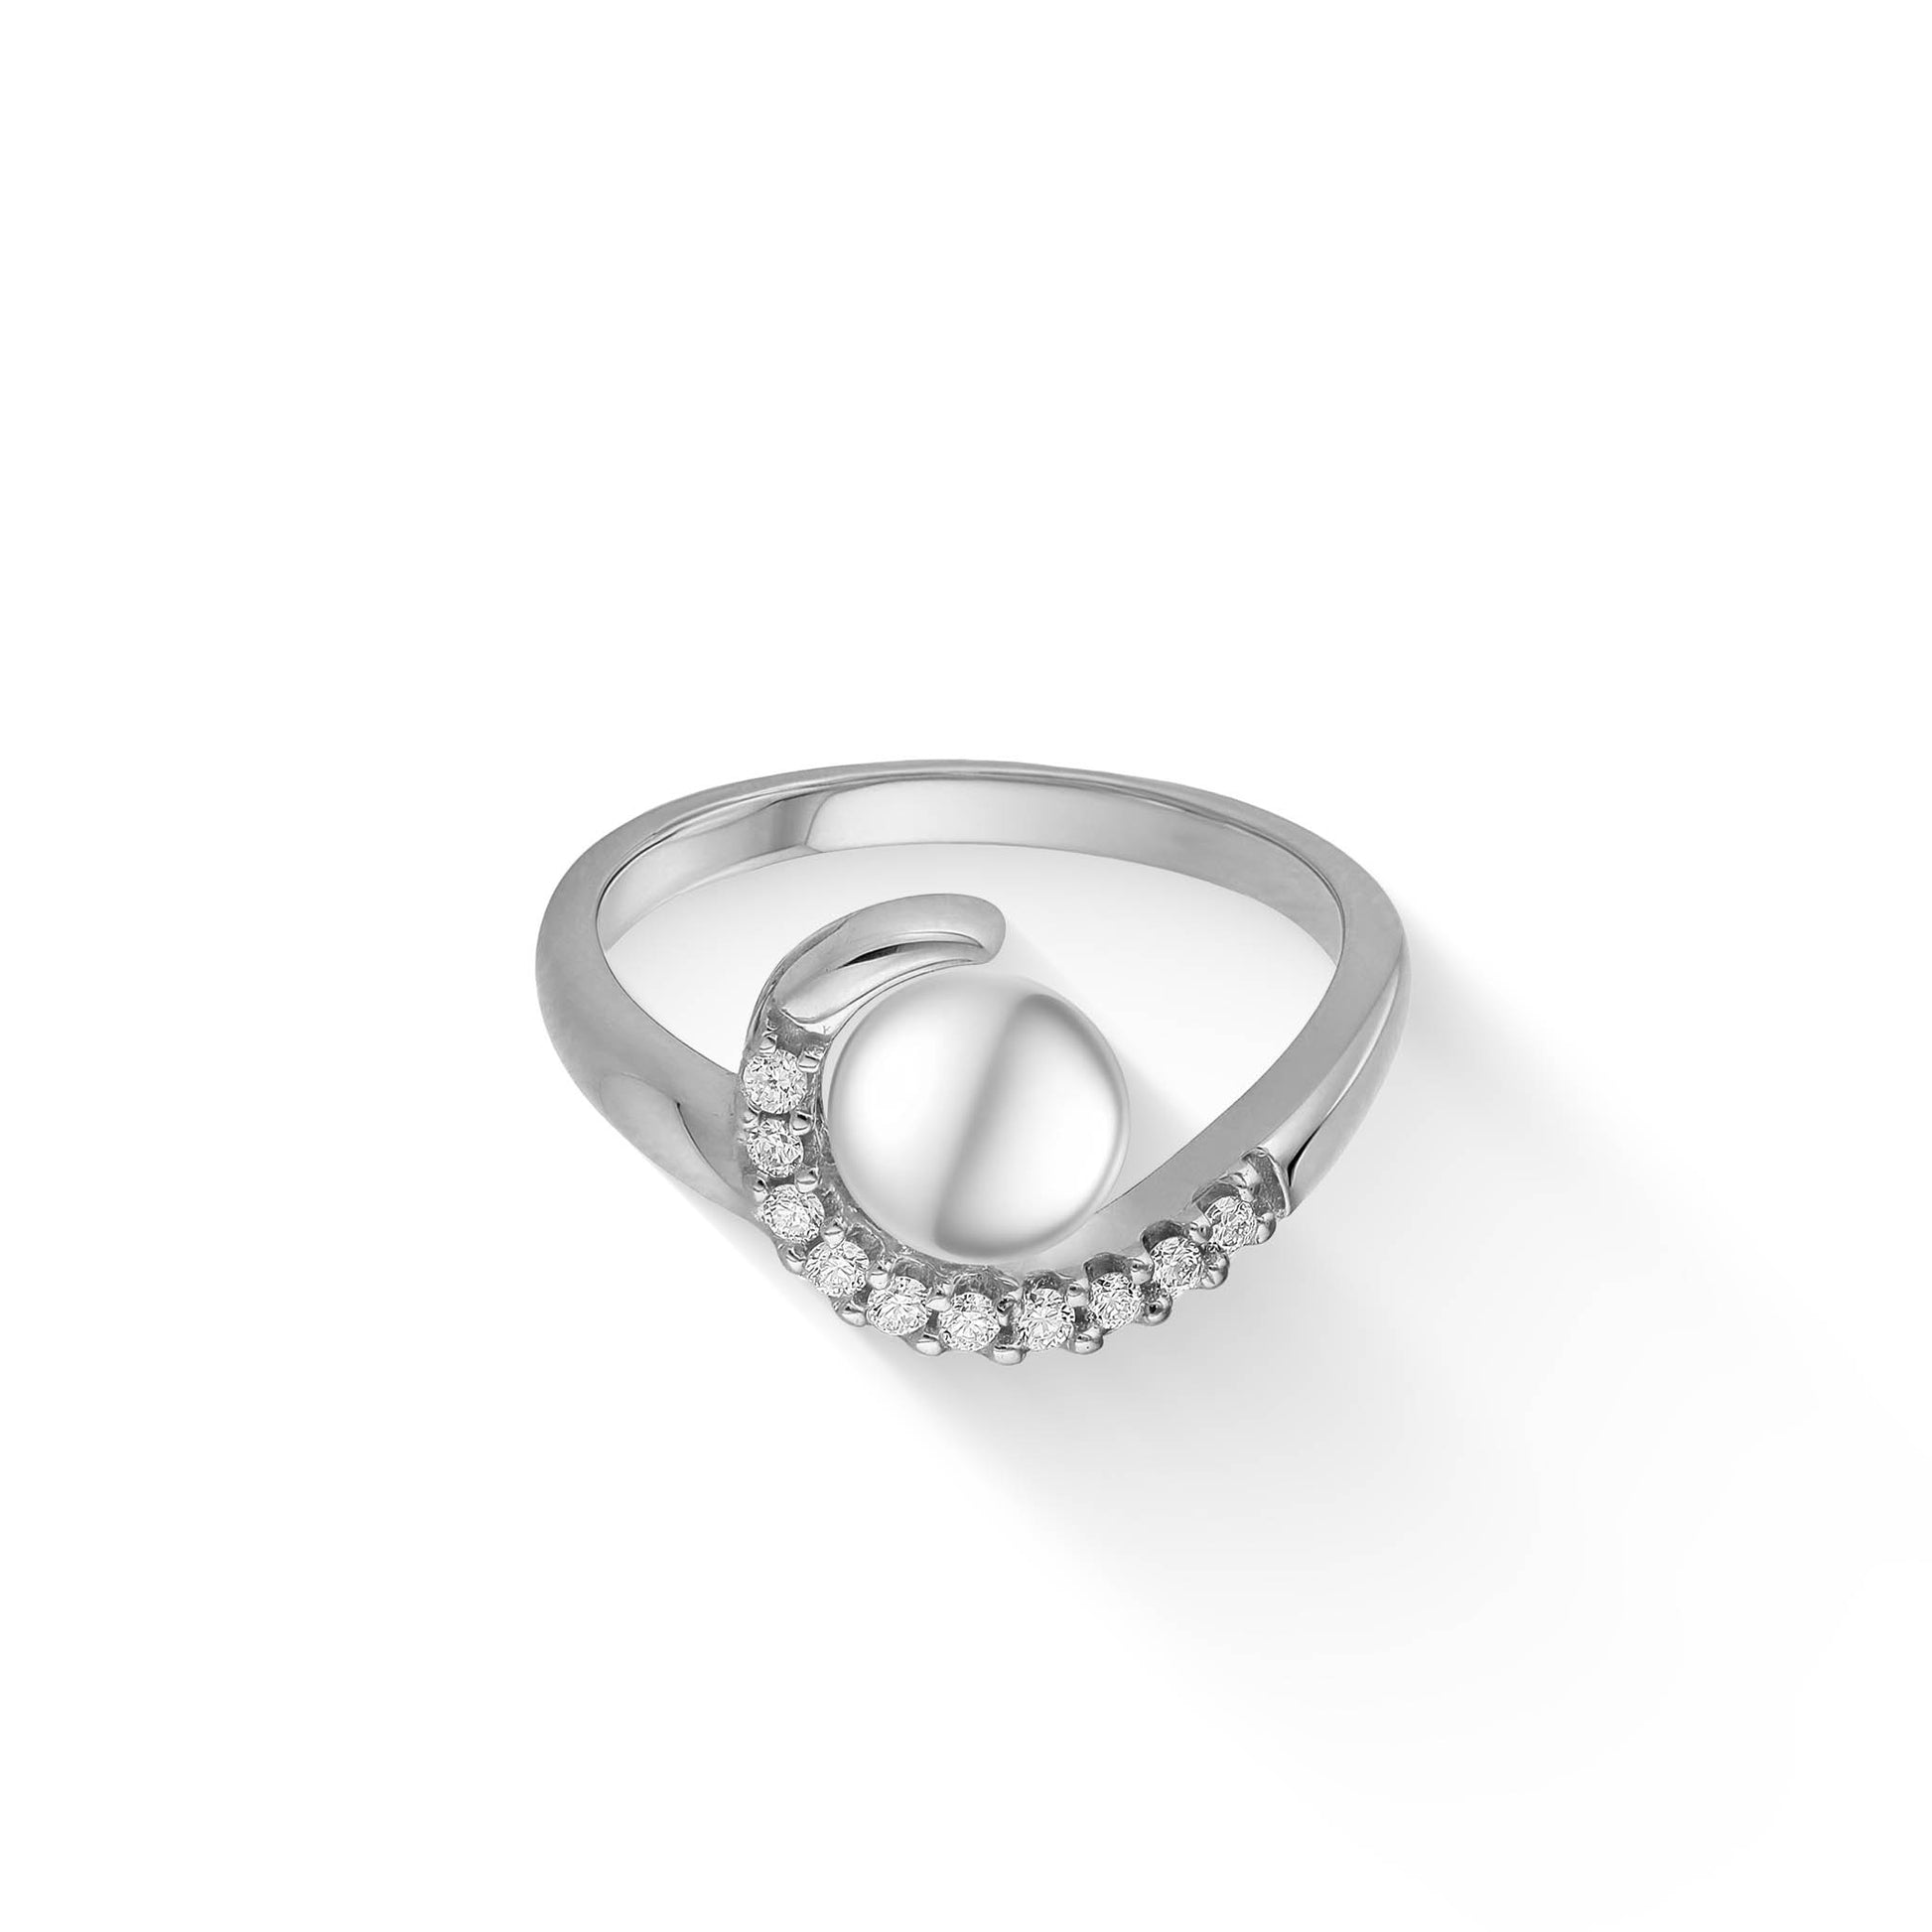 02017 - 14K White Gold - Hook Diamond Ring, Size 7